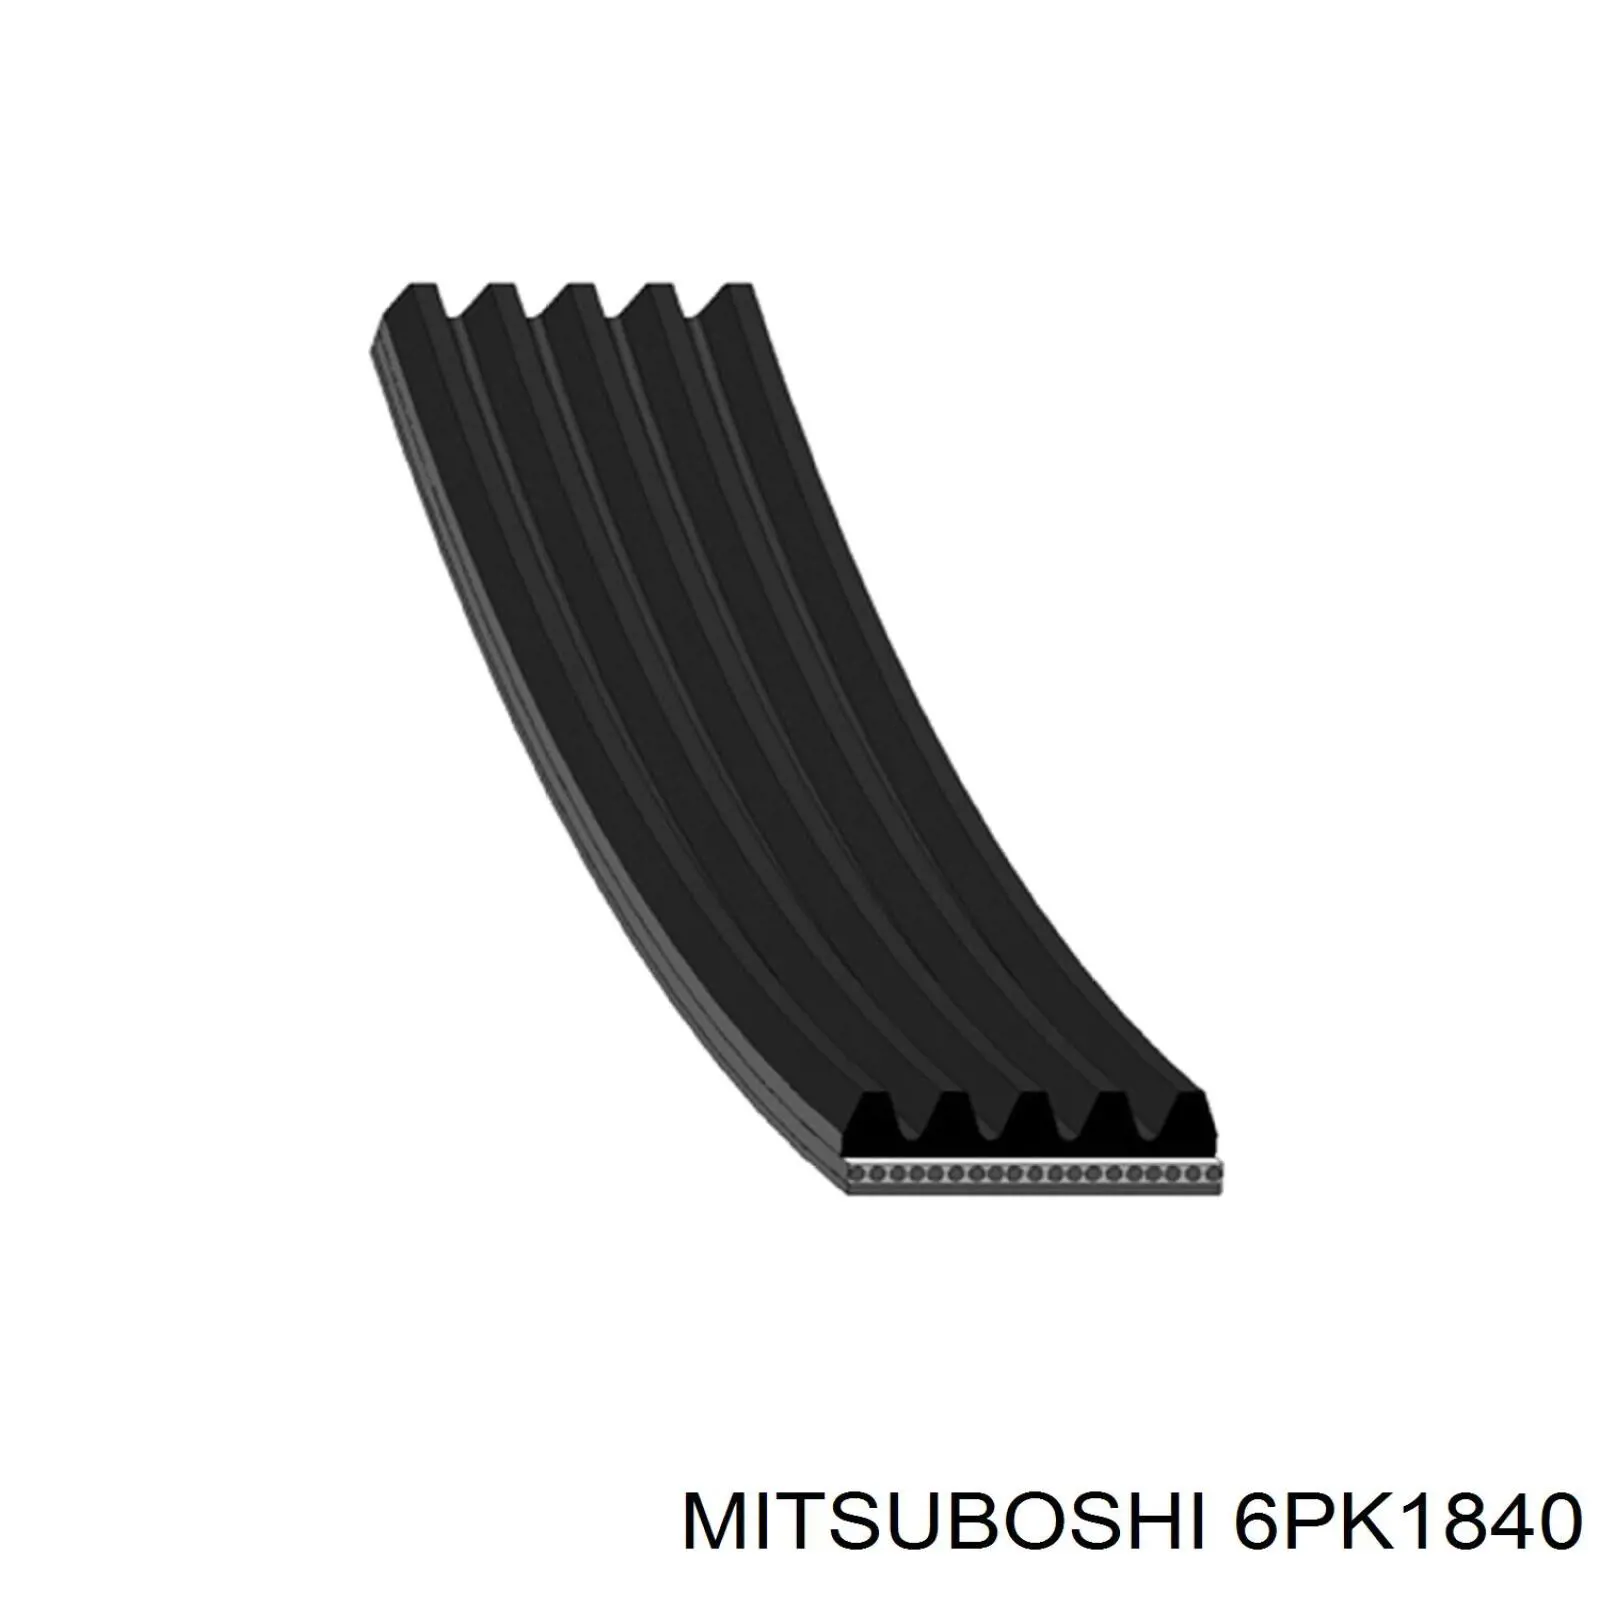 6PK1840 Mitsuboshi correa trapezoidal